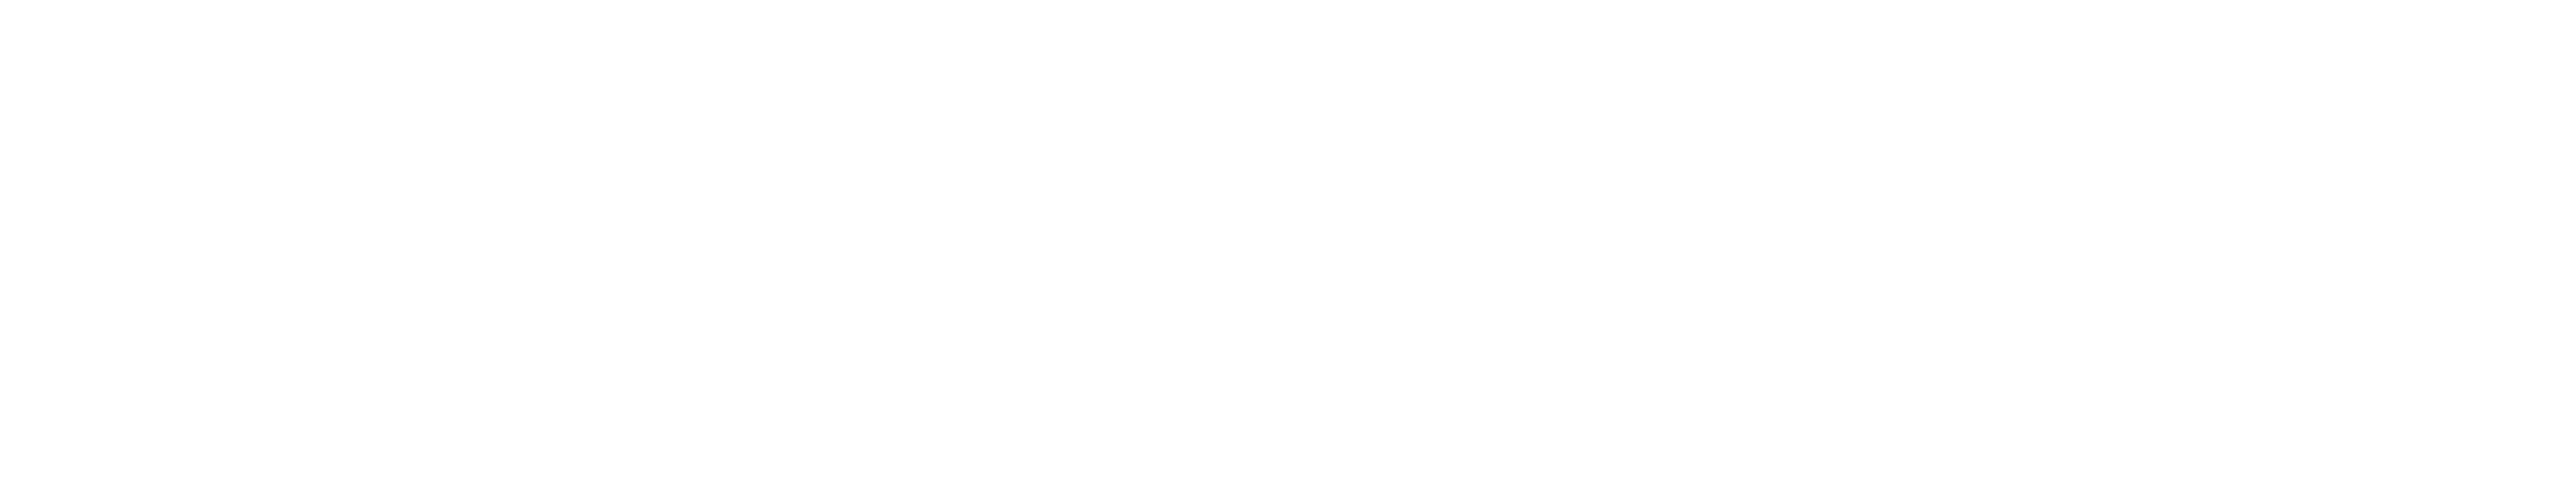 southwell logo